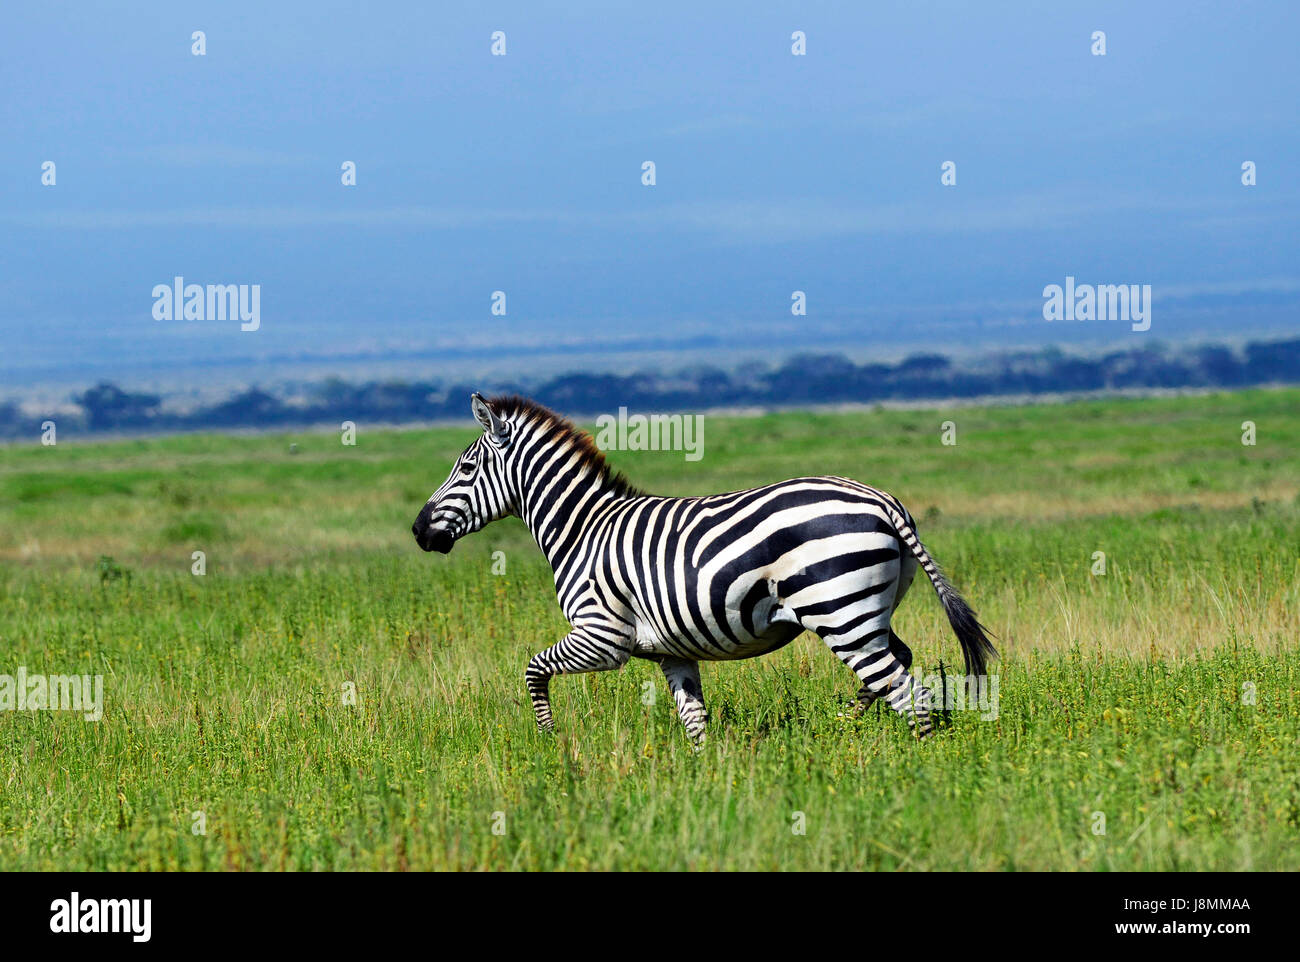 Common Zebras at Amboseli national park in Kenya. Stock Photo